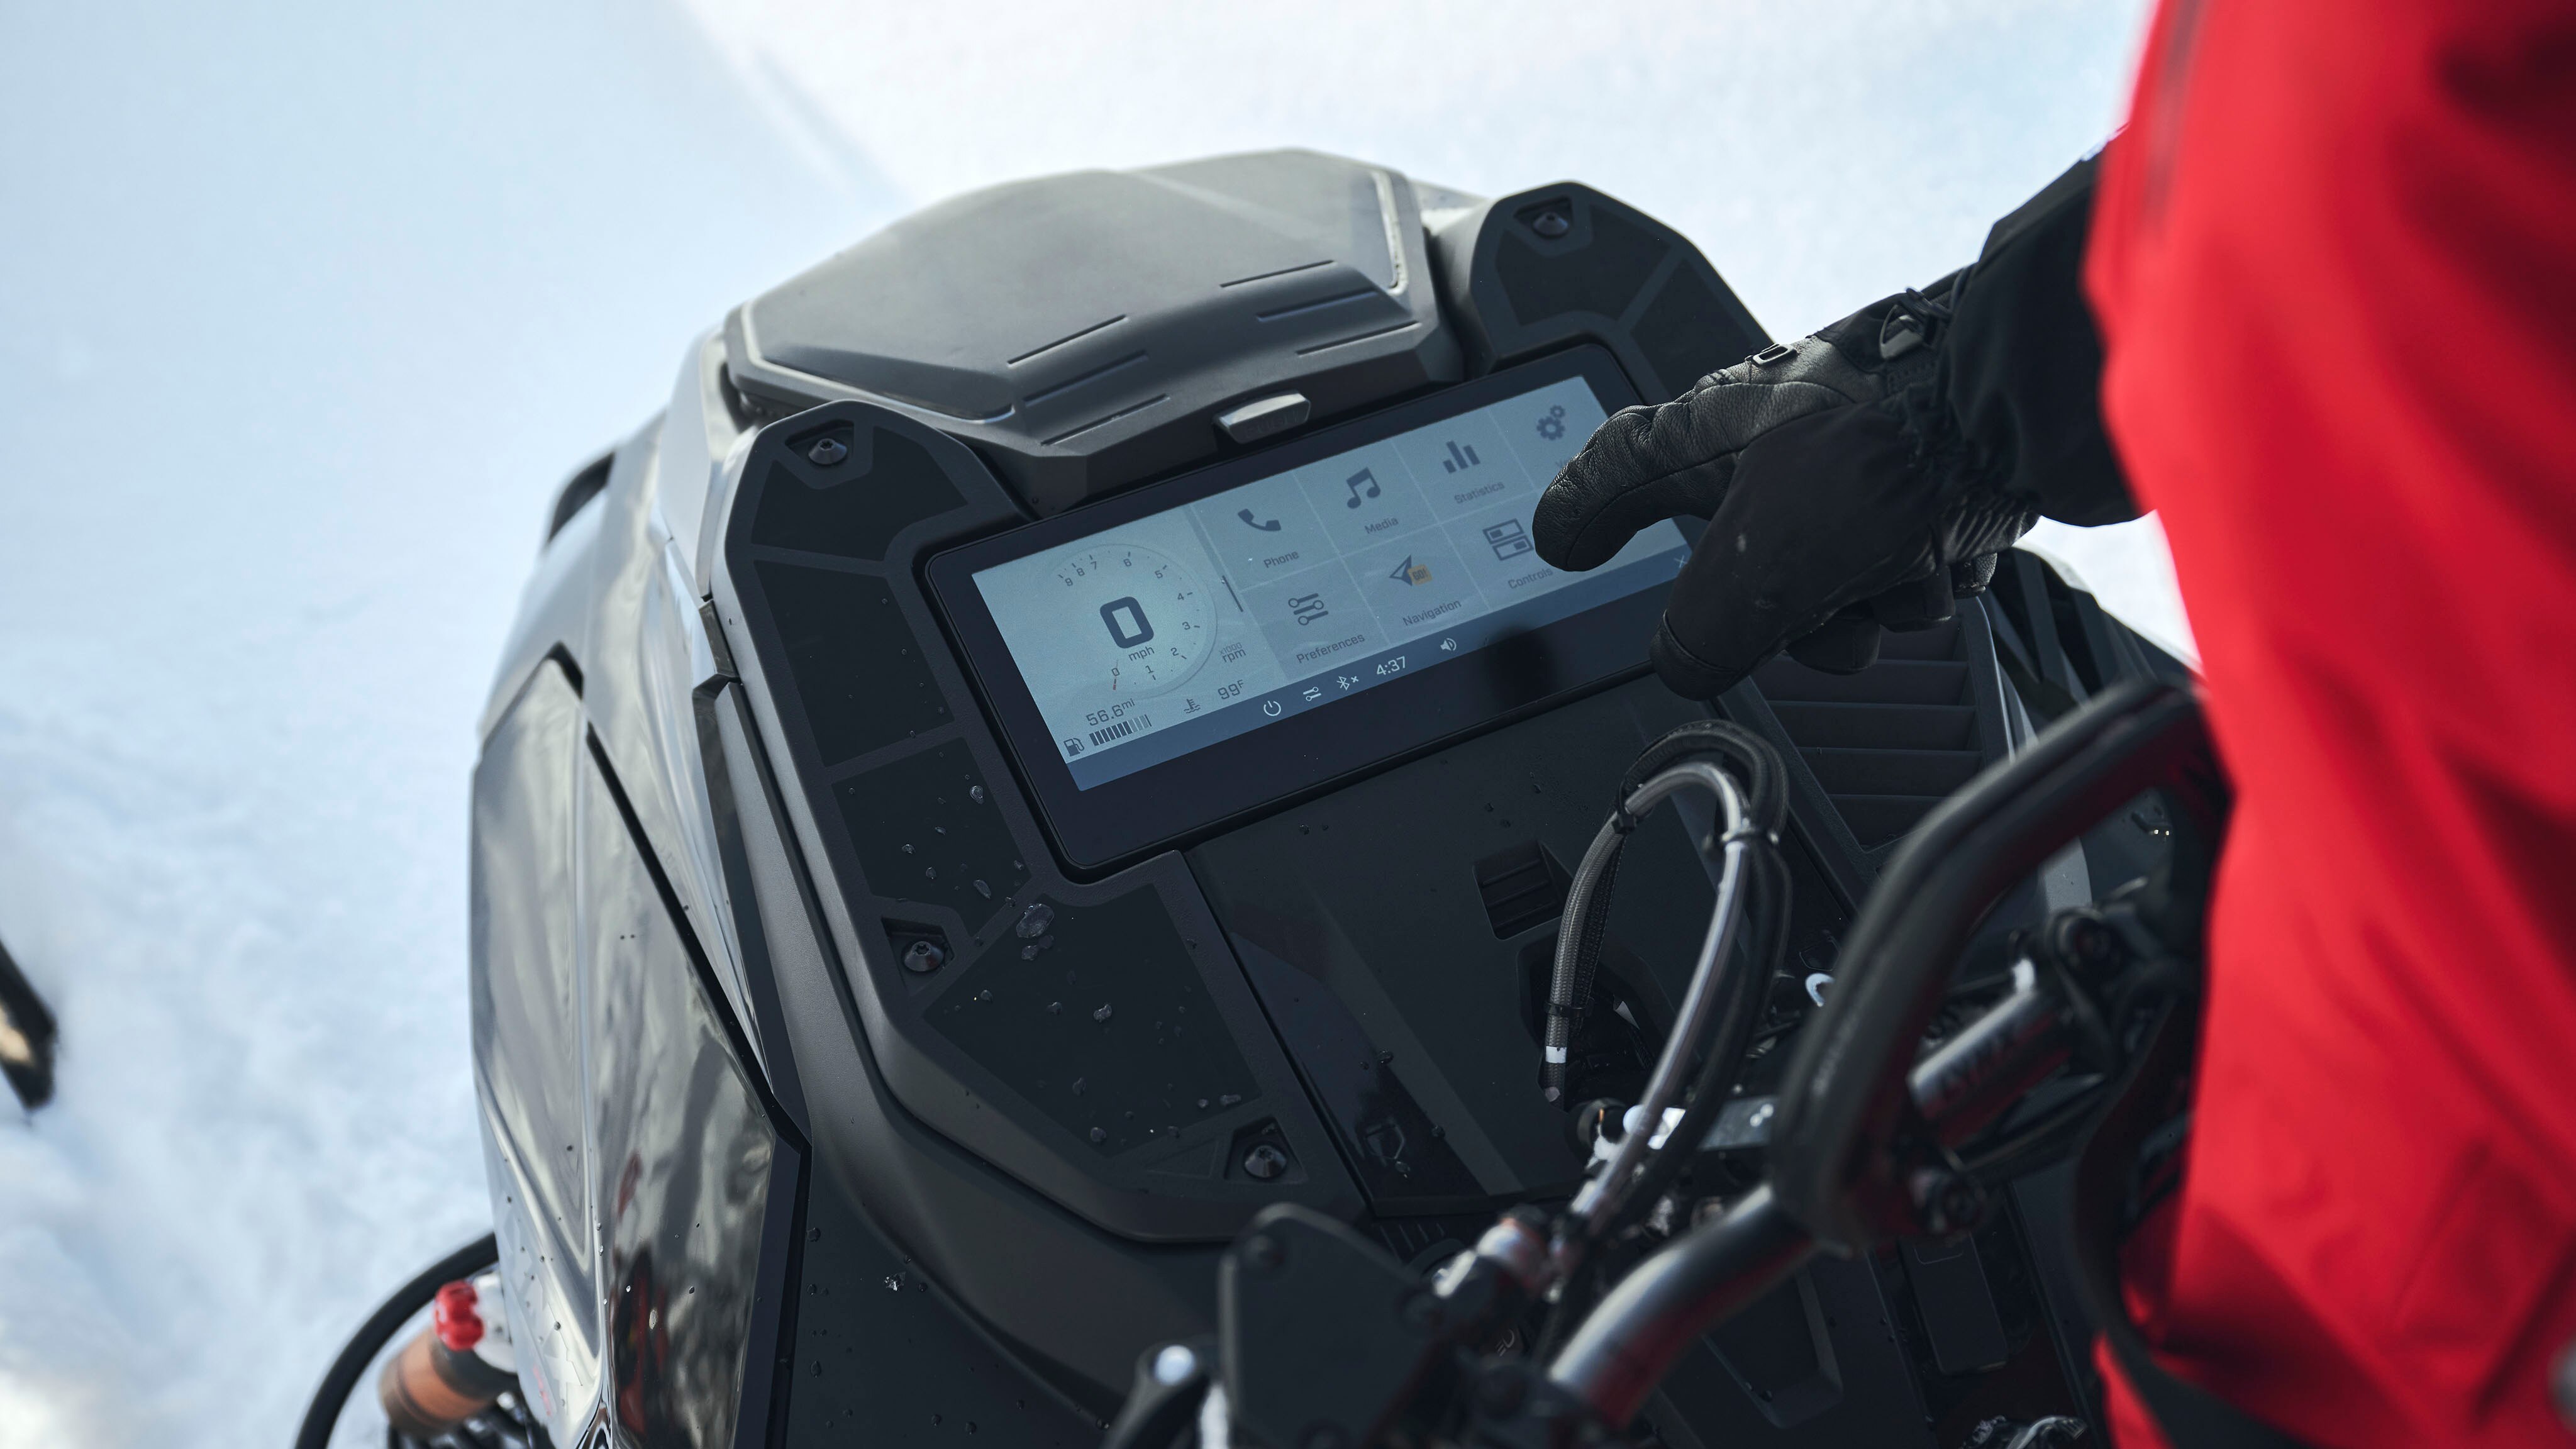 10.25" touchscreen display on Lynx Shredder snowmobile